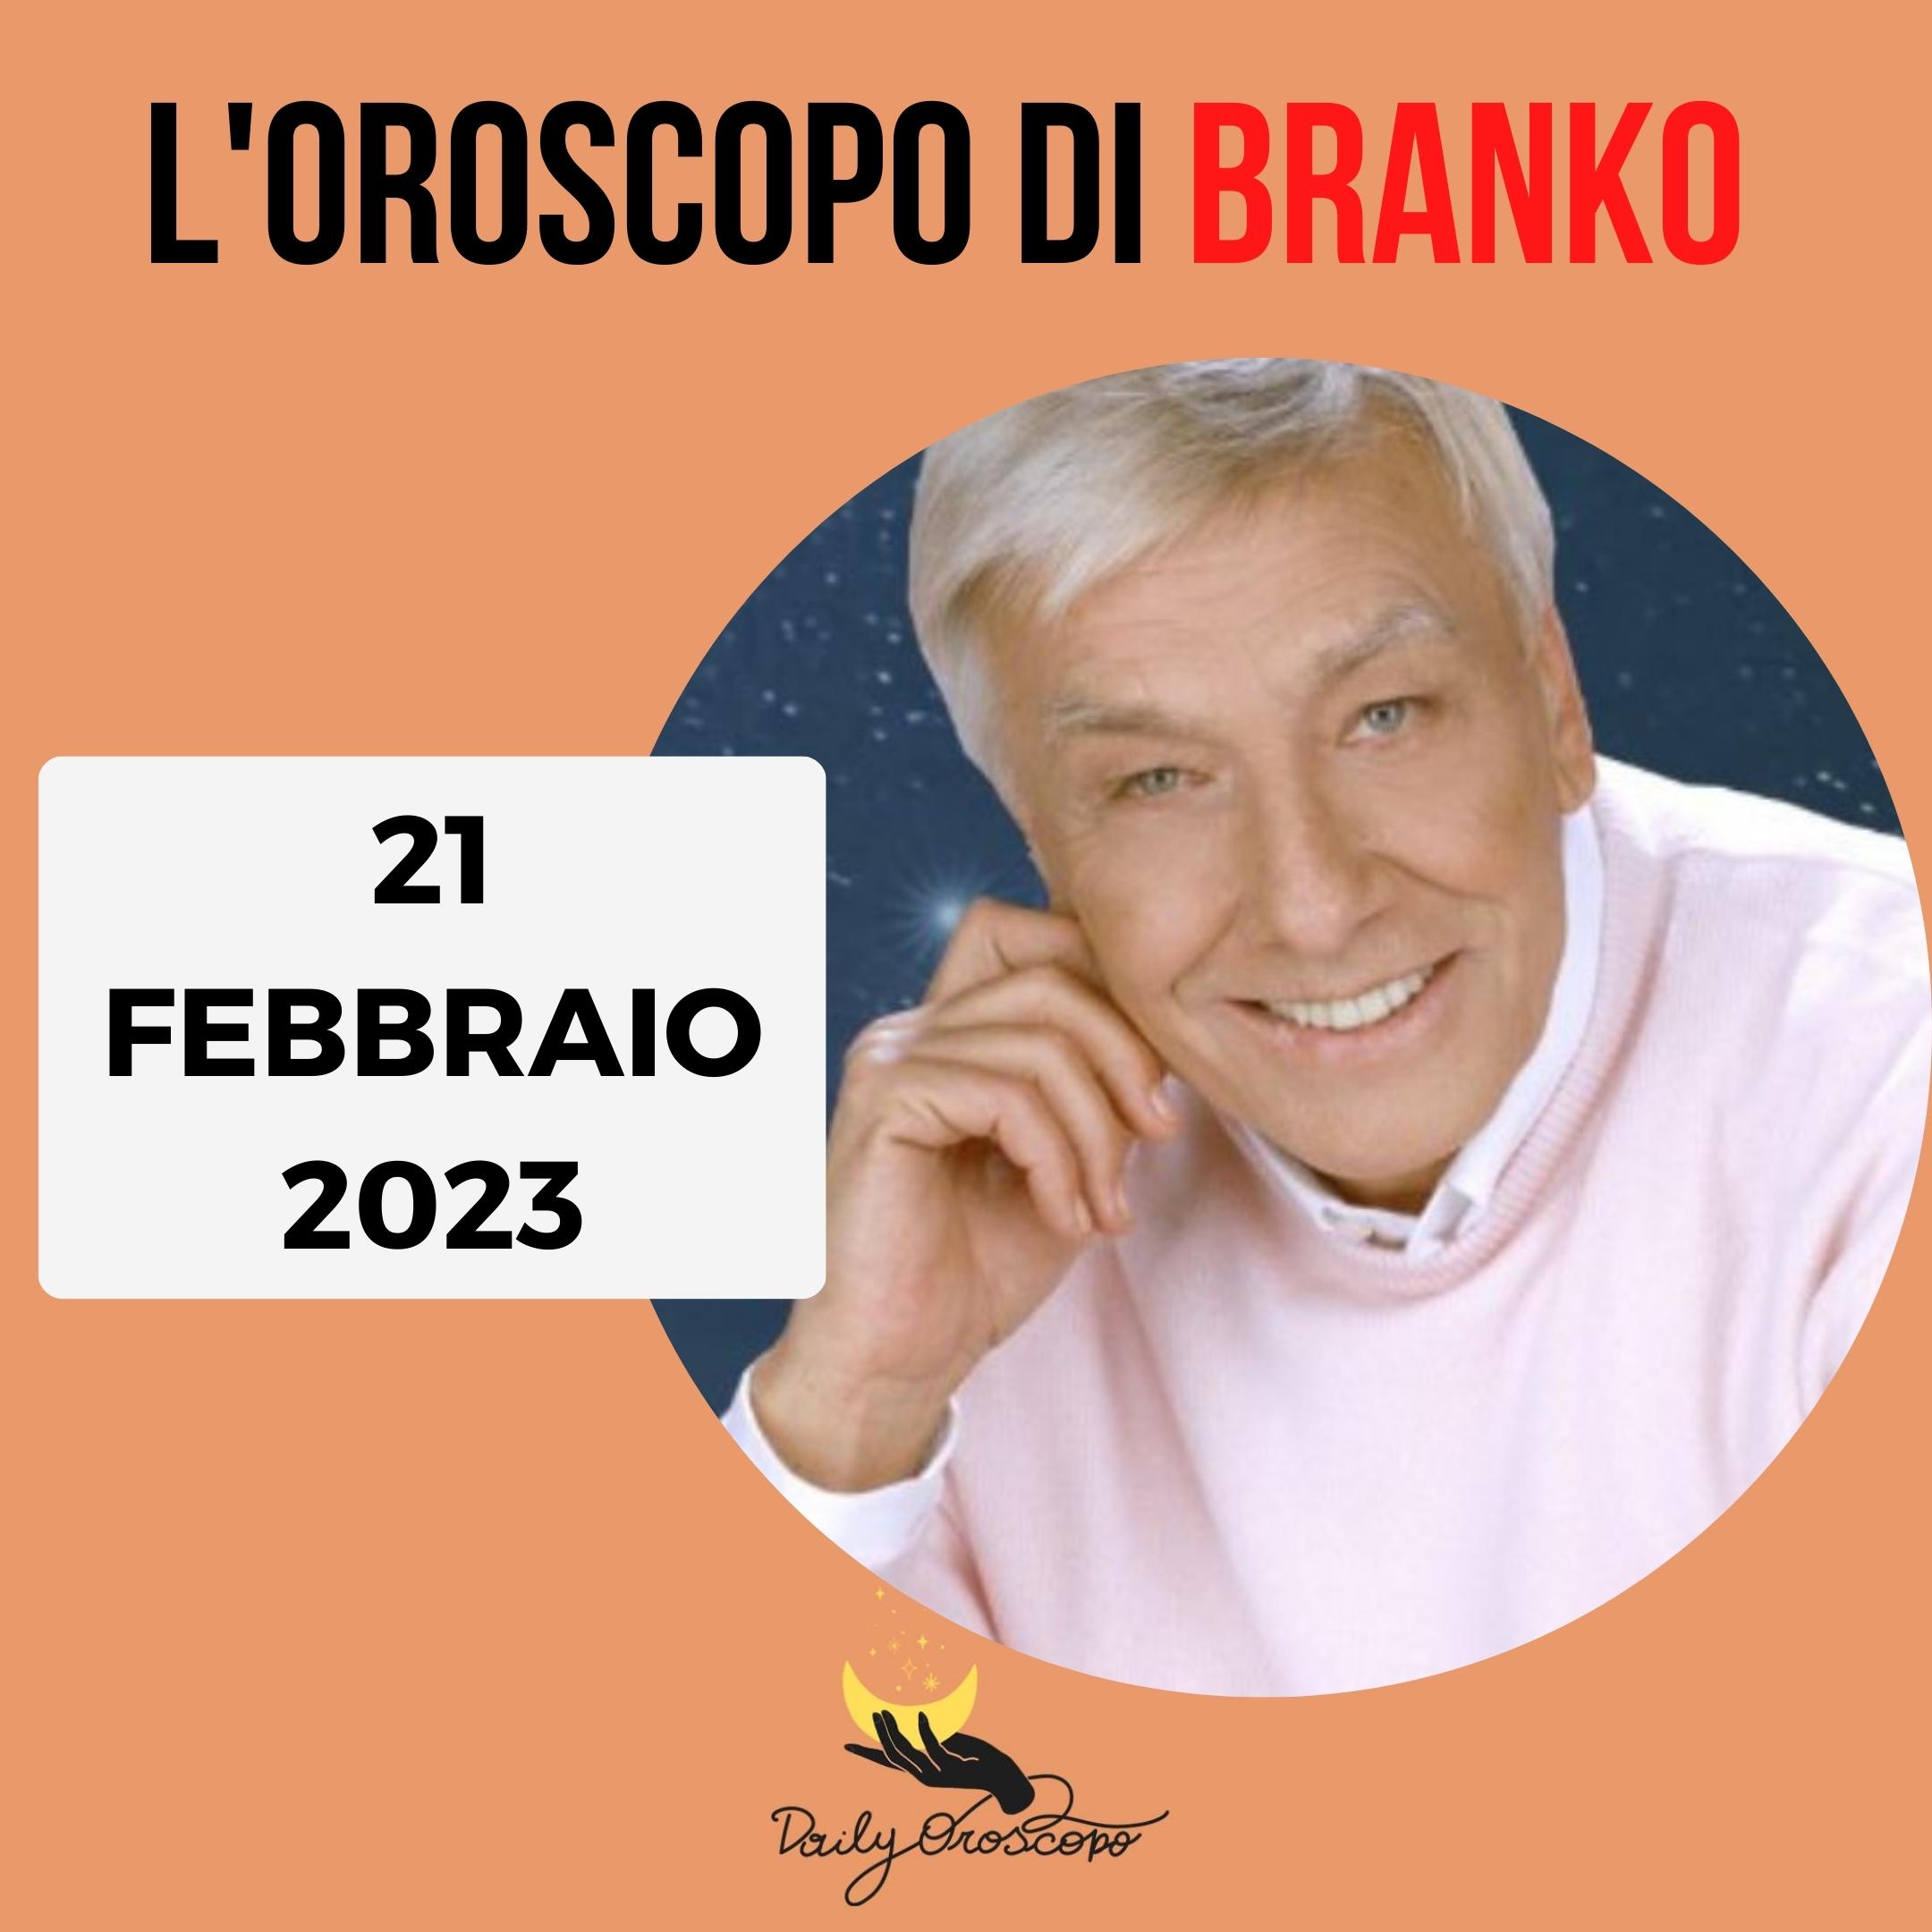 Oroscopo Branko oggi 21 febbraio 2023